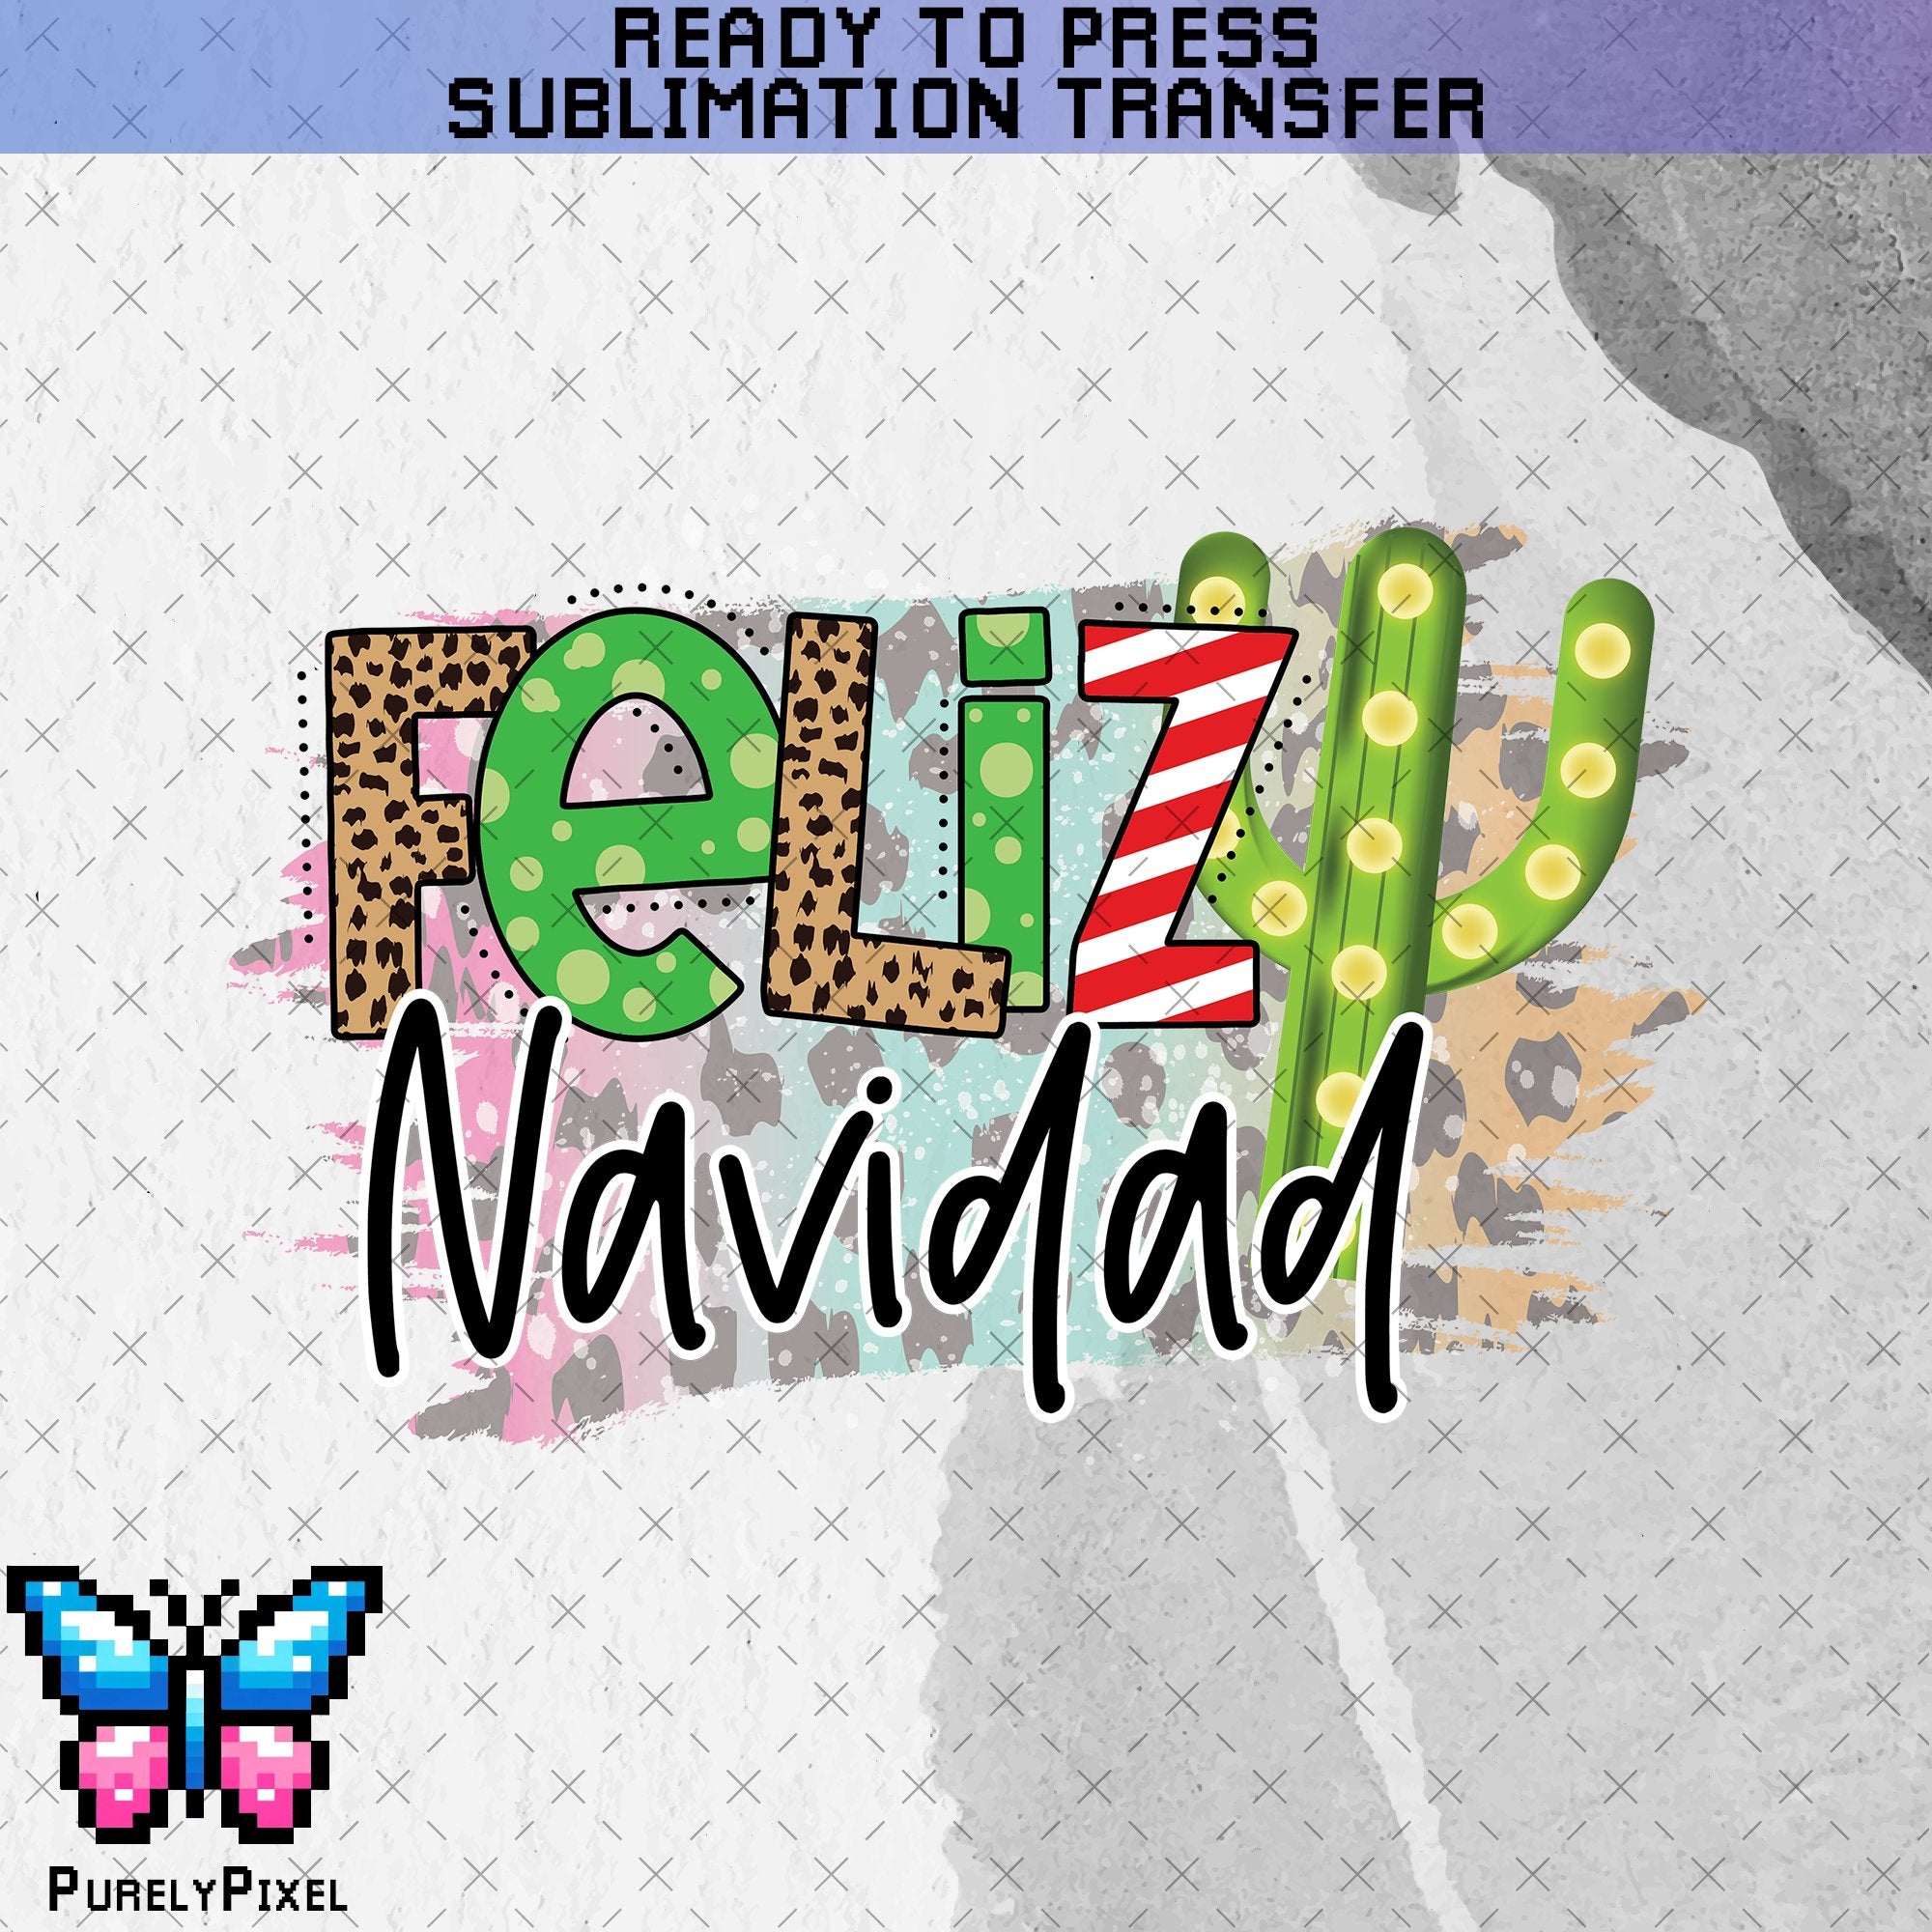 Feliz Navidad Sub Transfer | Christmas and Winter Cactus Holiday Transfer | Candy Cane Festive Ready to Press Sublimation Transfer | PurelyPixels | Sublimation Transfers